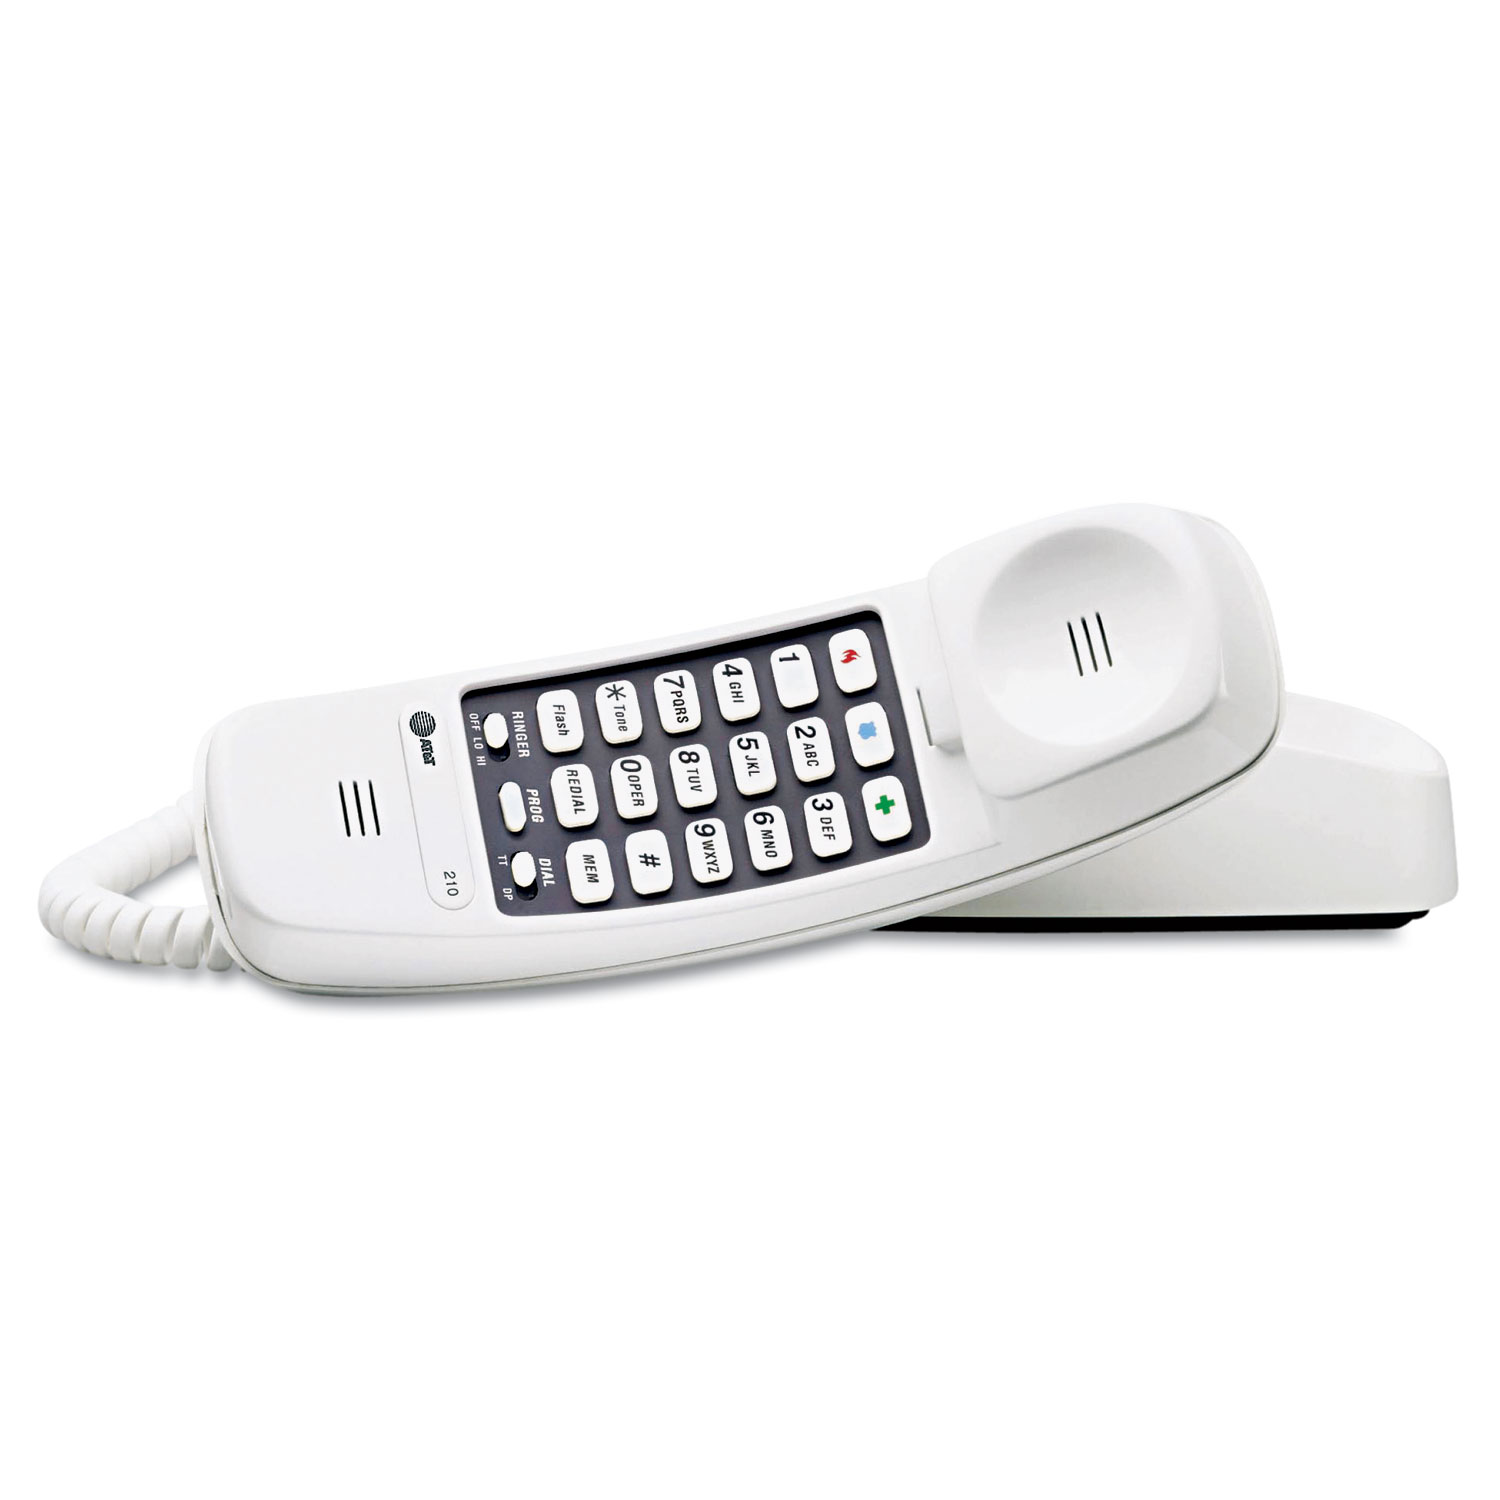 210 Trimline Telephone, White